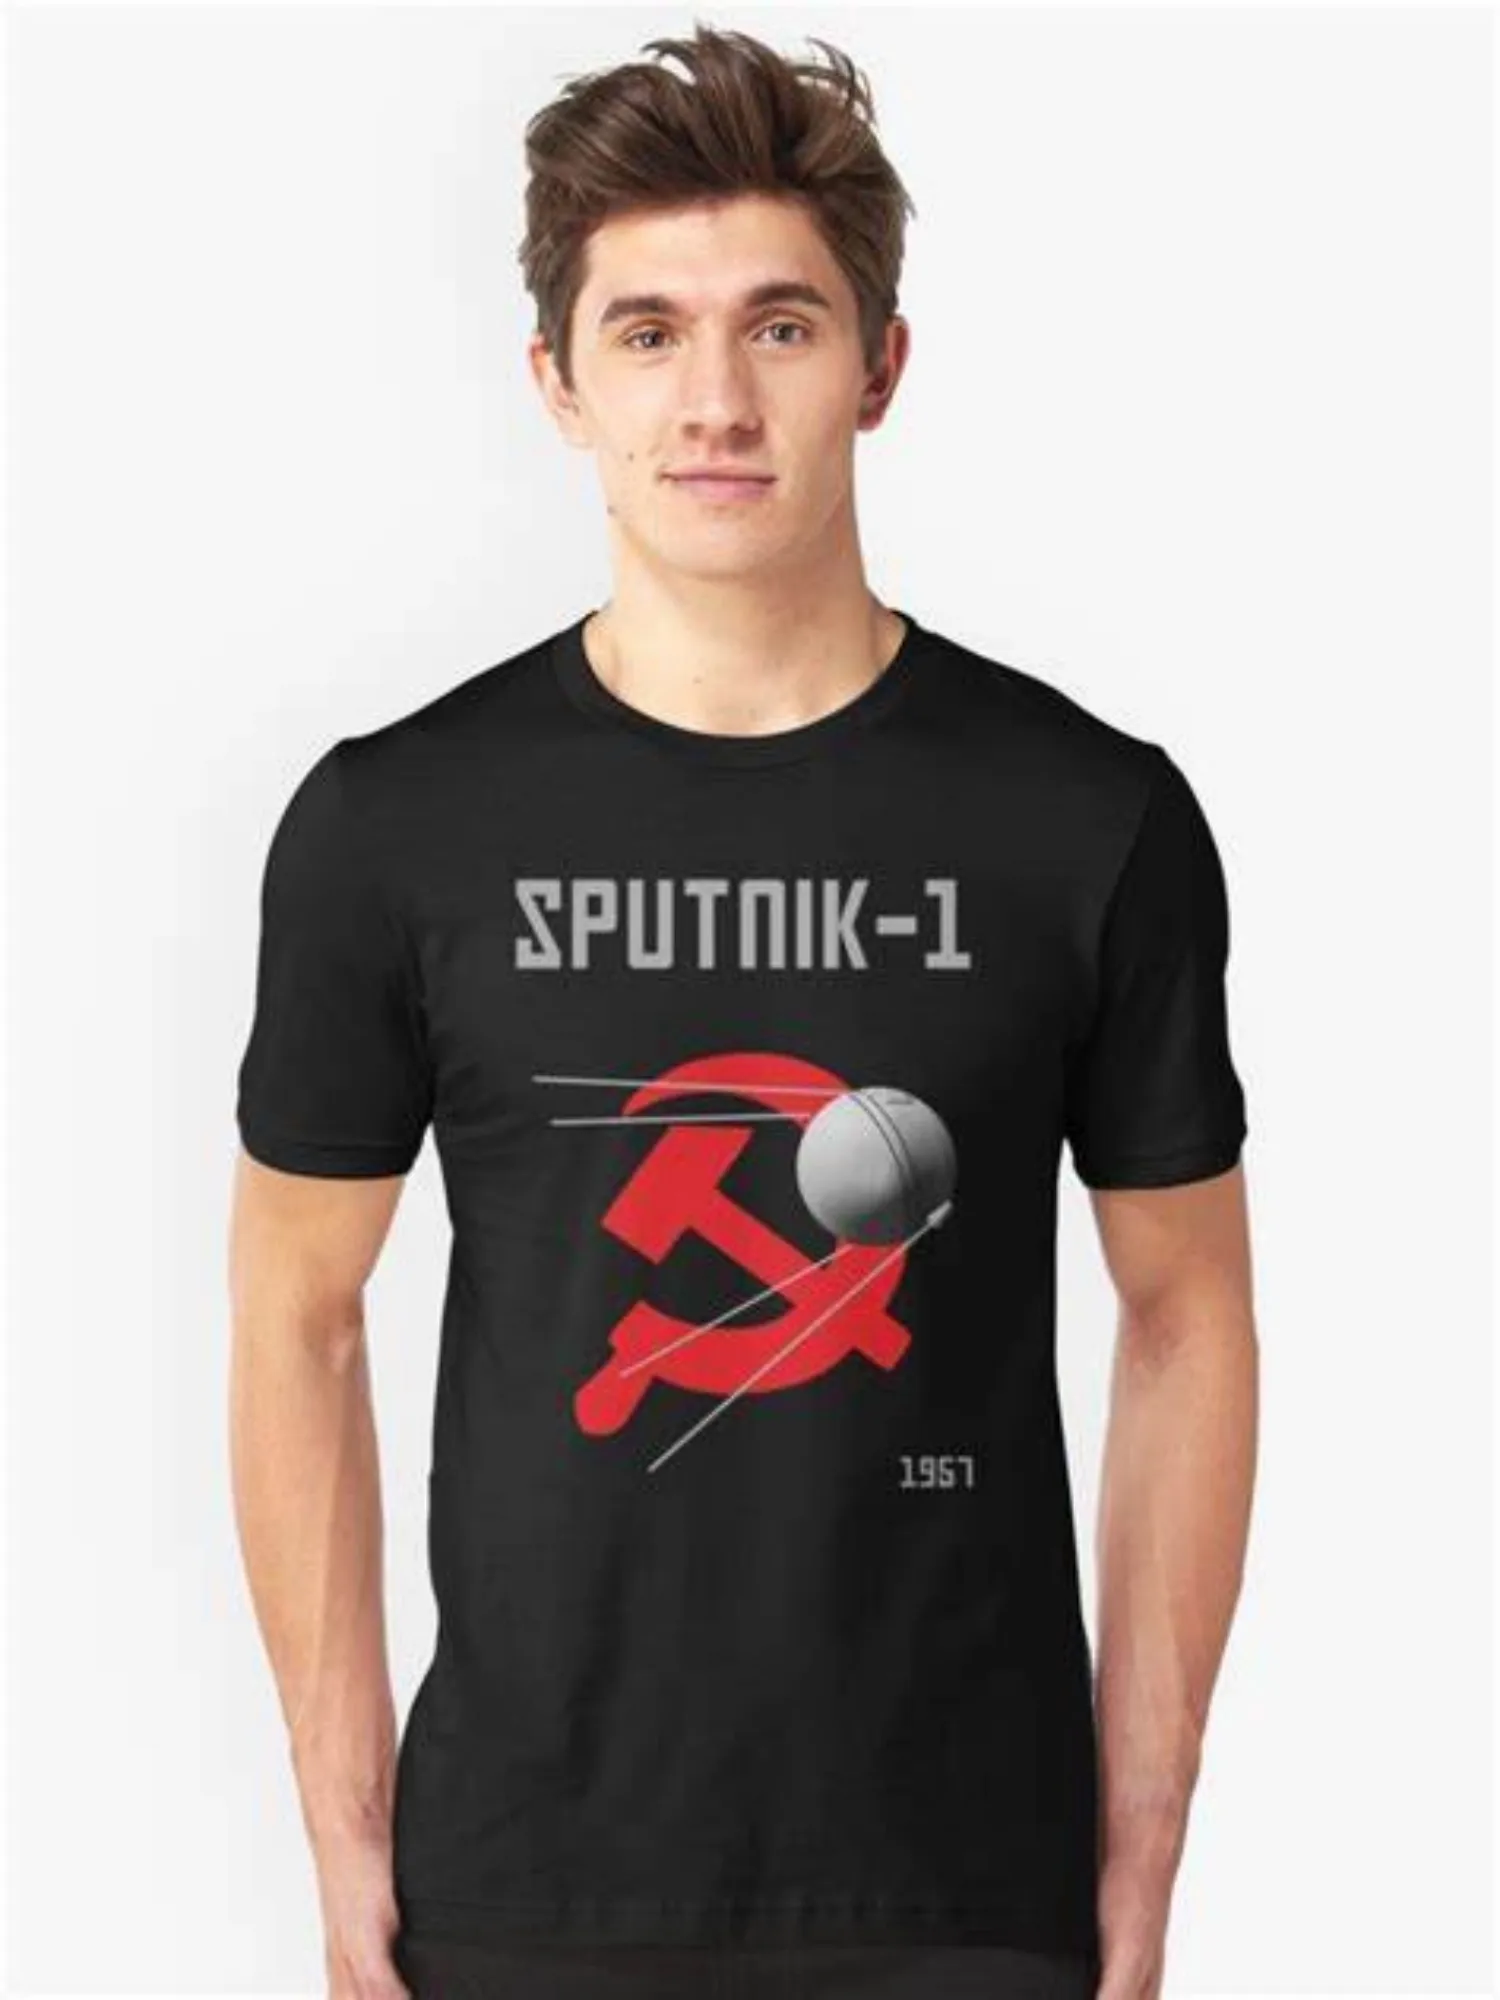 

Soviet Union Space Program "Sputnik - 1" In 1957 T-Shirt 100% Cotton O-Neck Summer Short Sleeve Casual Mens T-shirt Size S-3XL